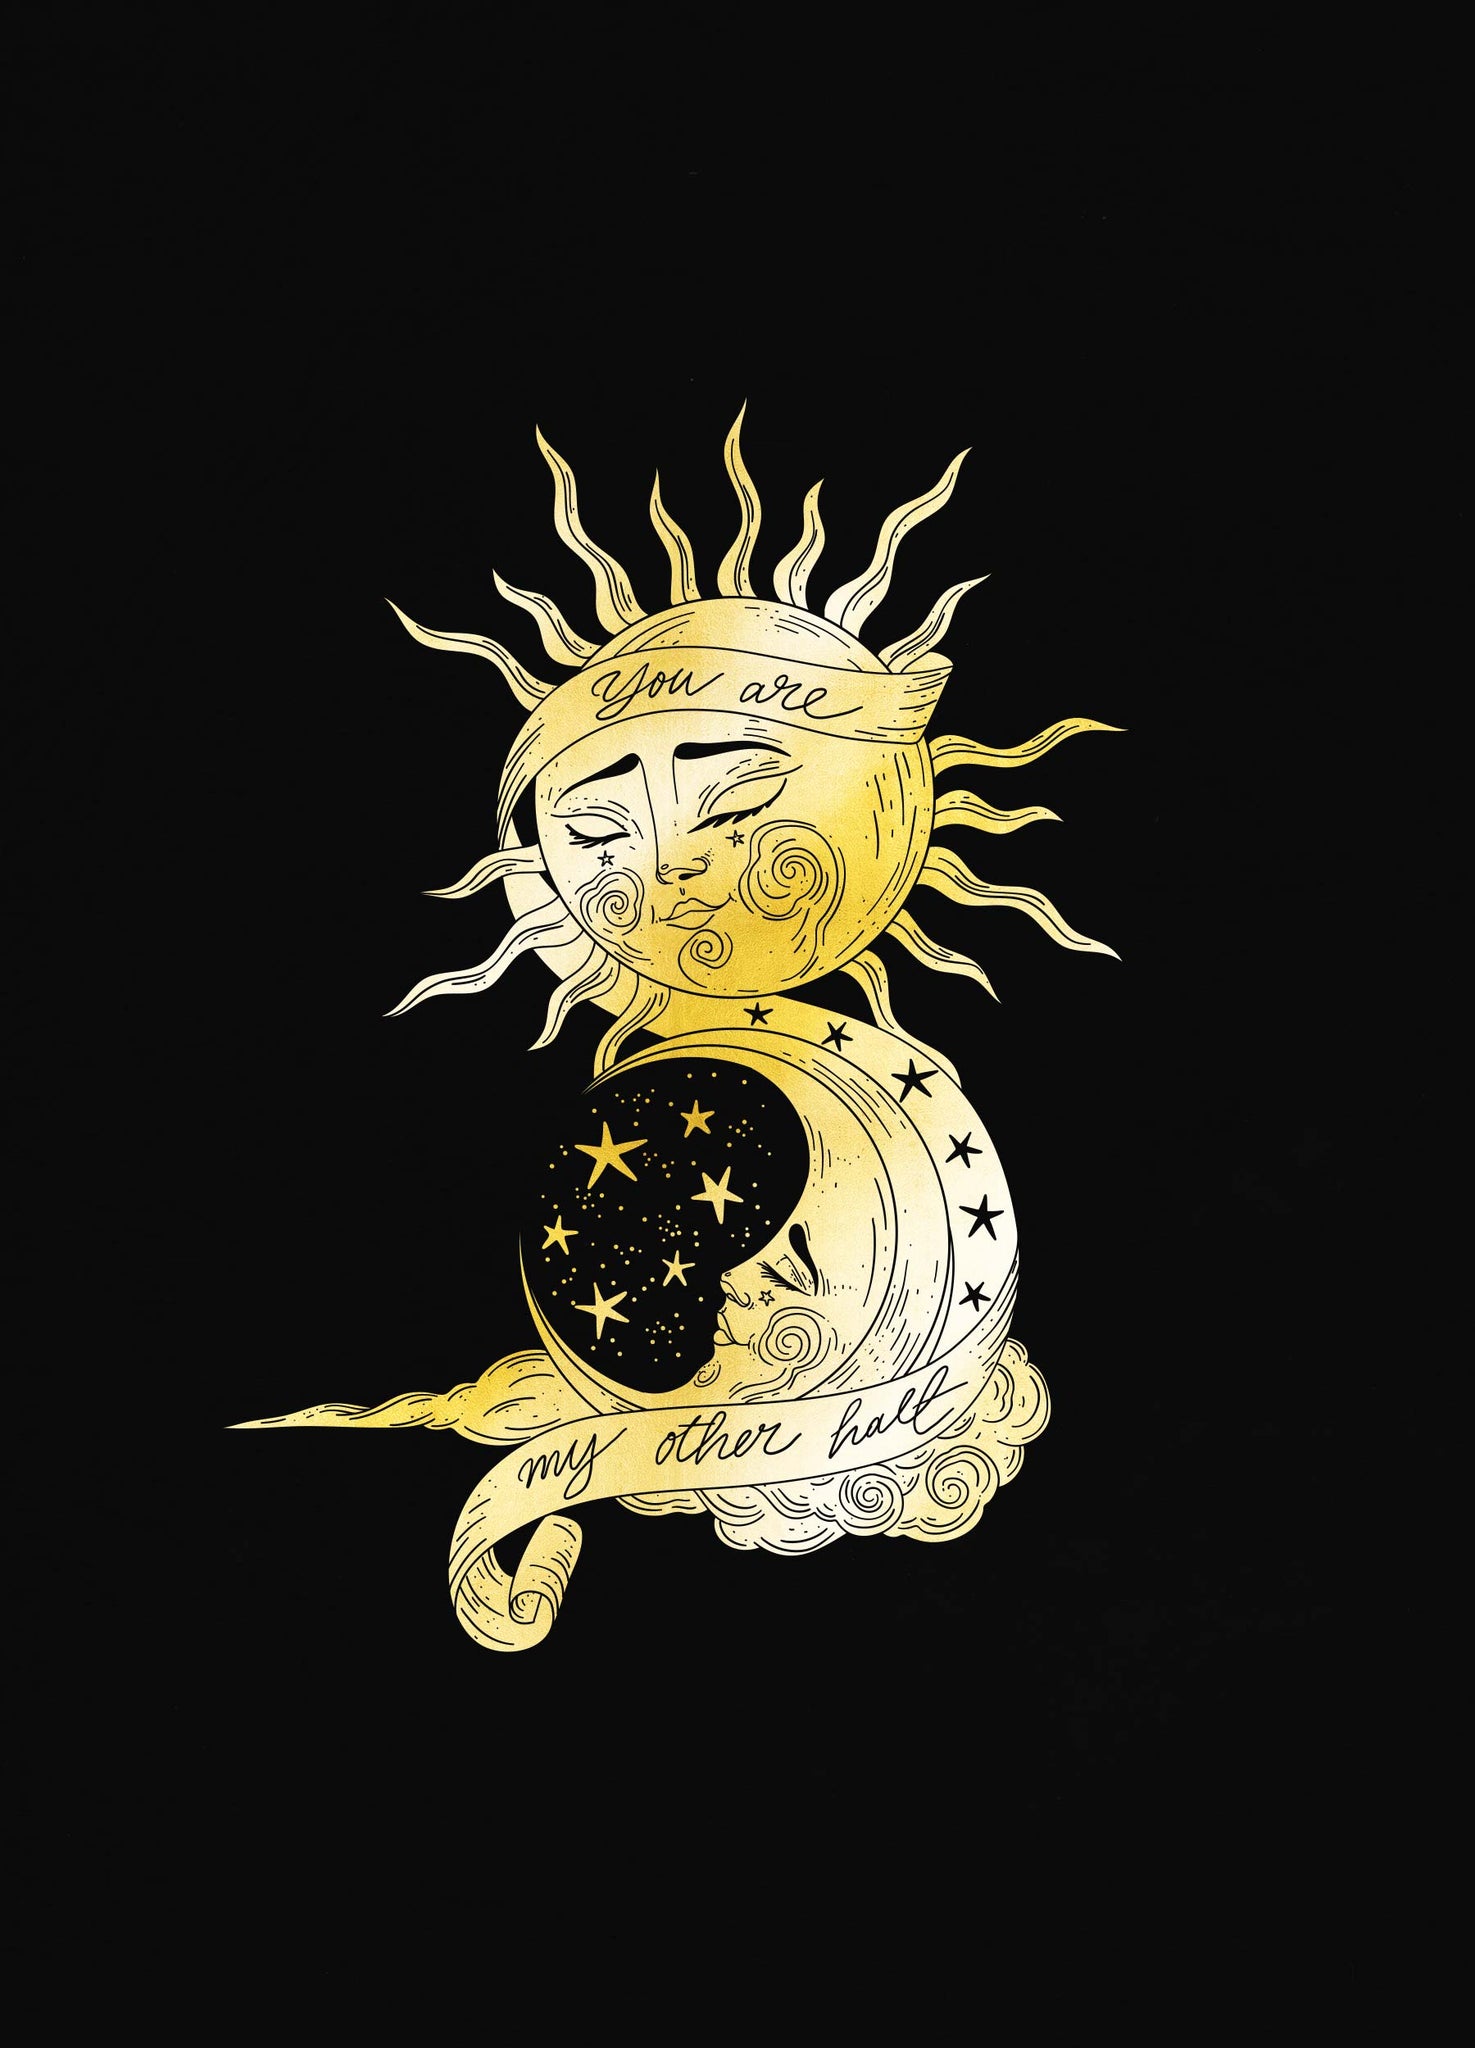 Sun Moon soulmates, gold foil art print on black paper by Cocorrina  & Co